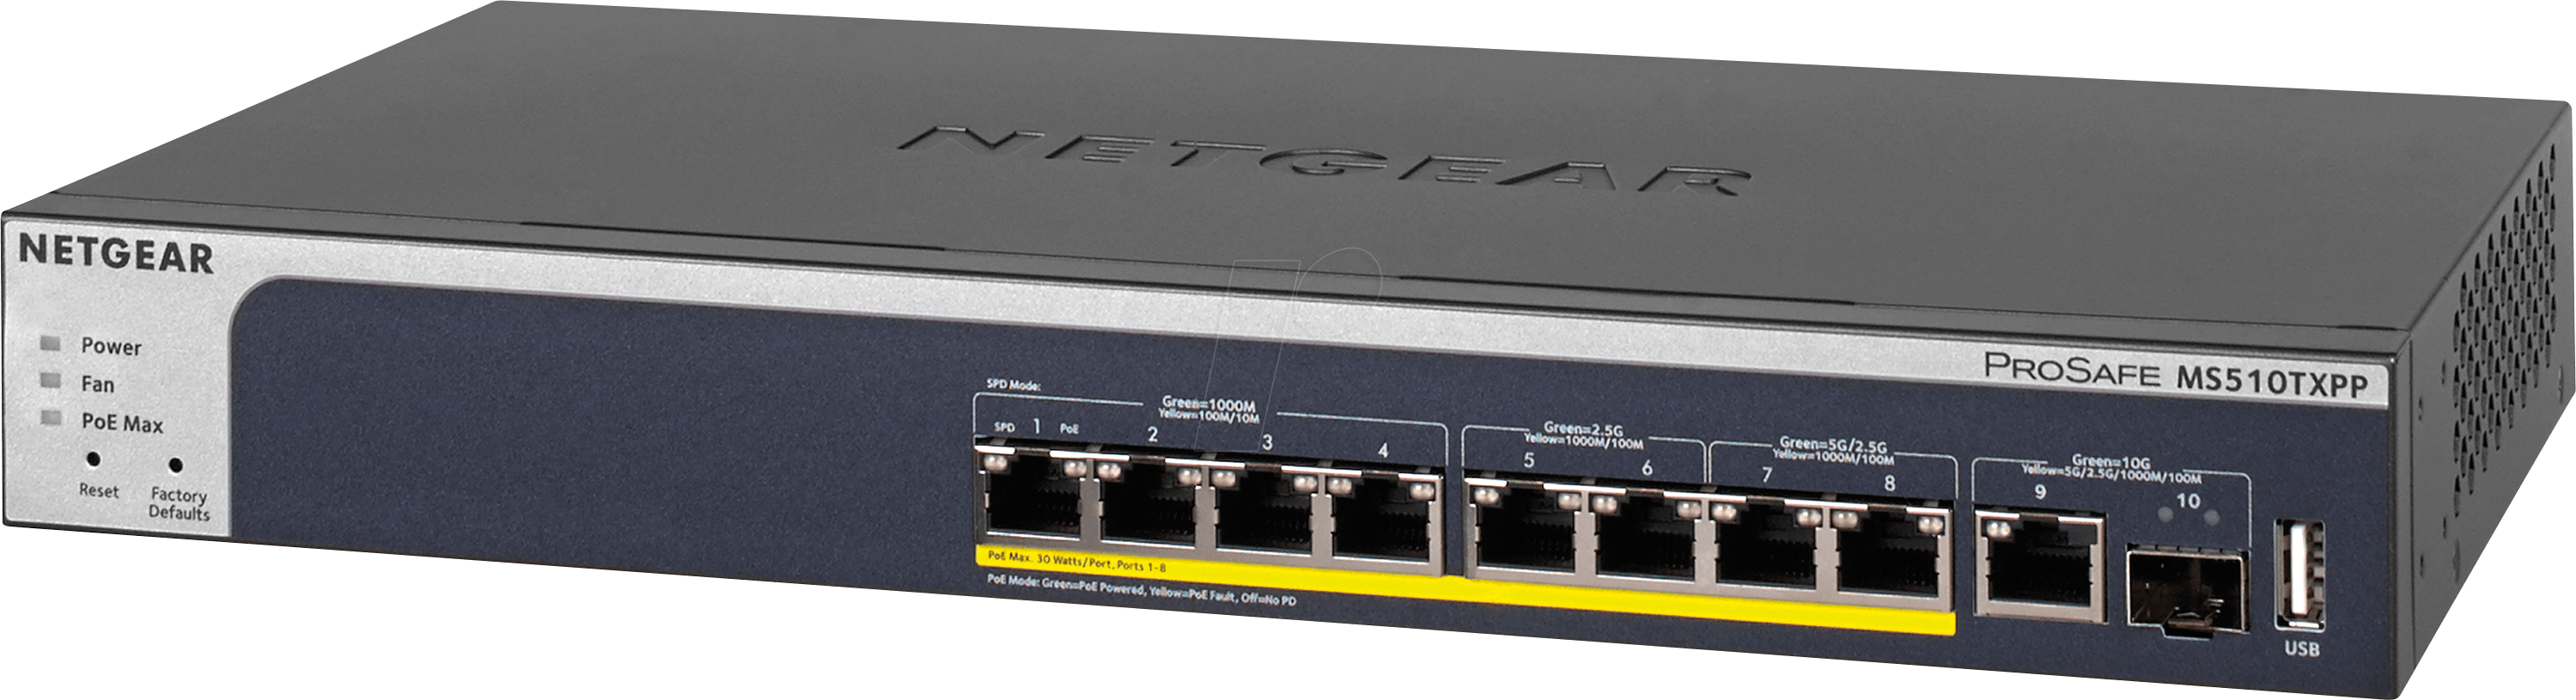 NETGEAR 8-Port PoE+ Multi-Gigabit Smart Managed Pro Switch with 10G Copper/Fiber Uplinks, MS510TXPP